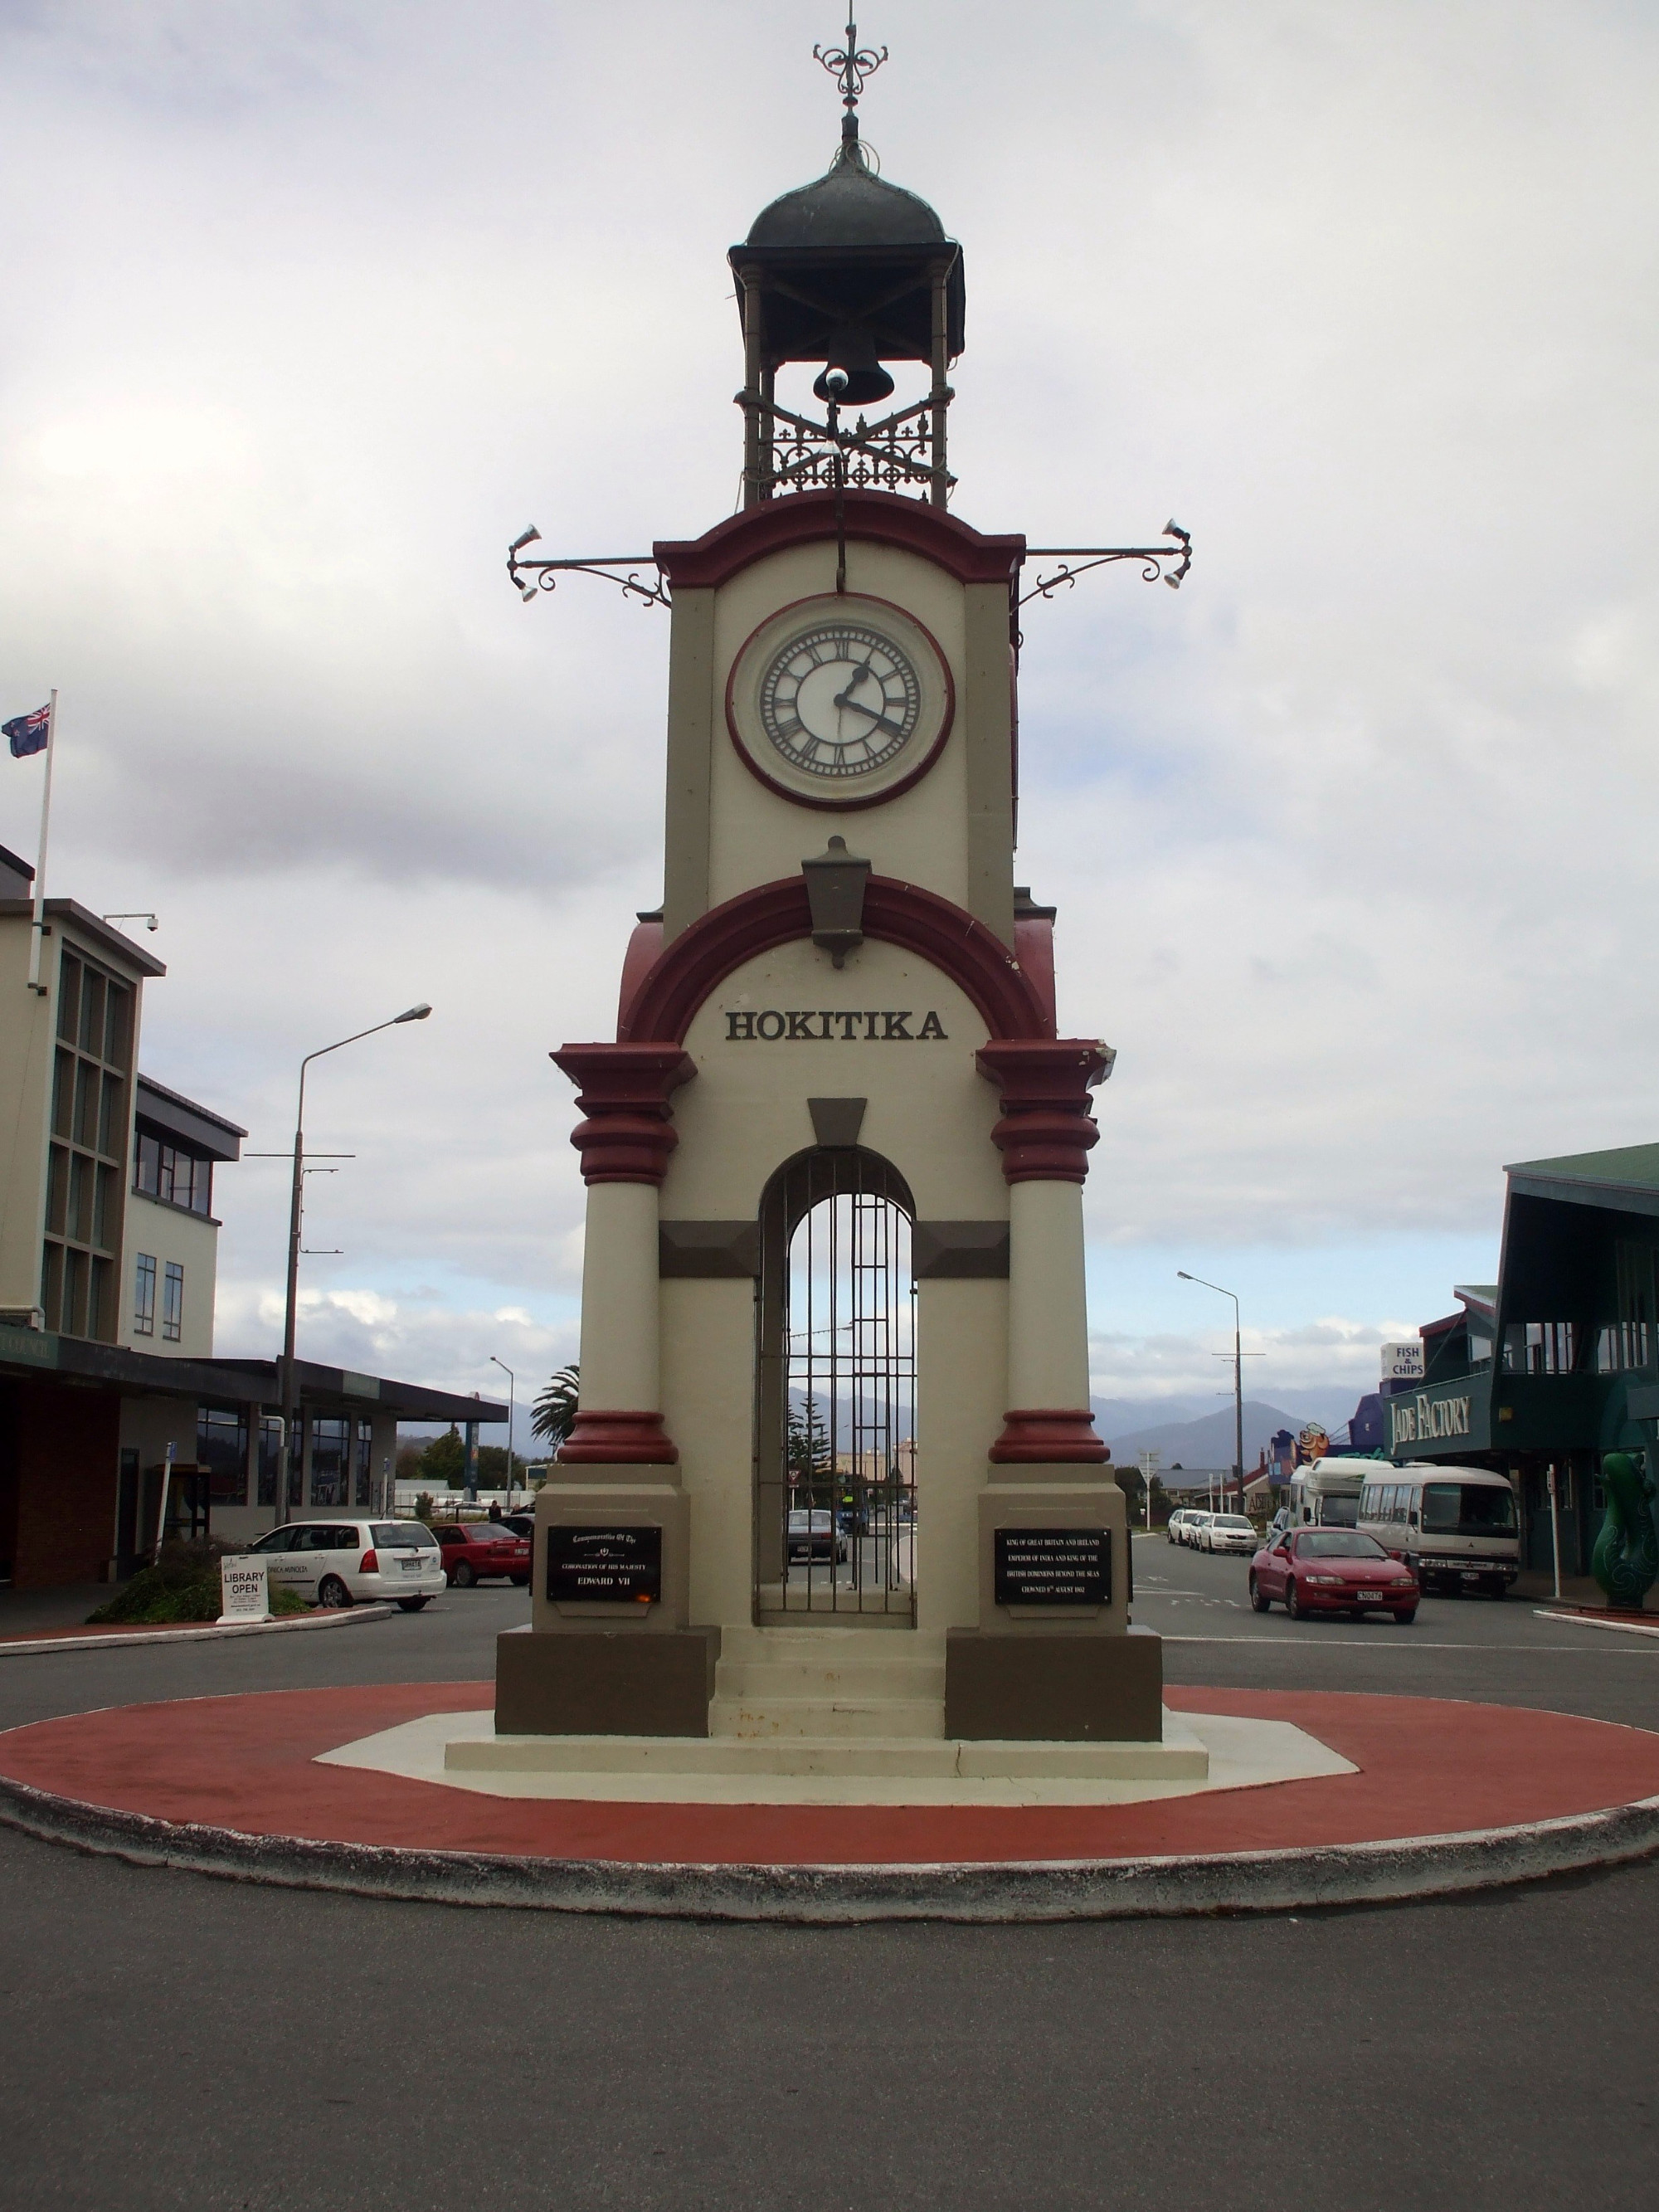 Hokitika Clock Tower, New Zealand